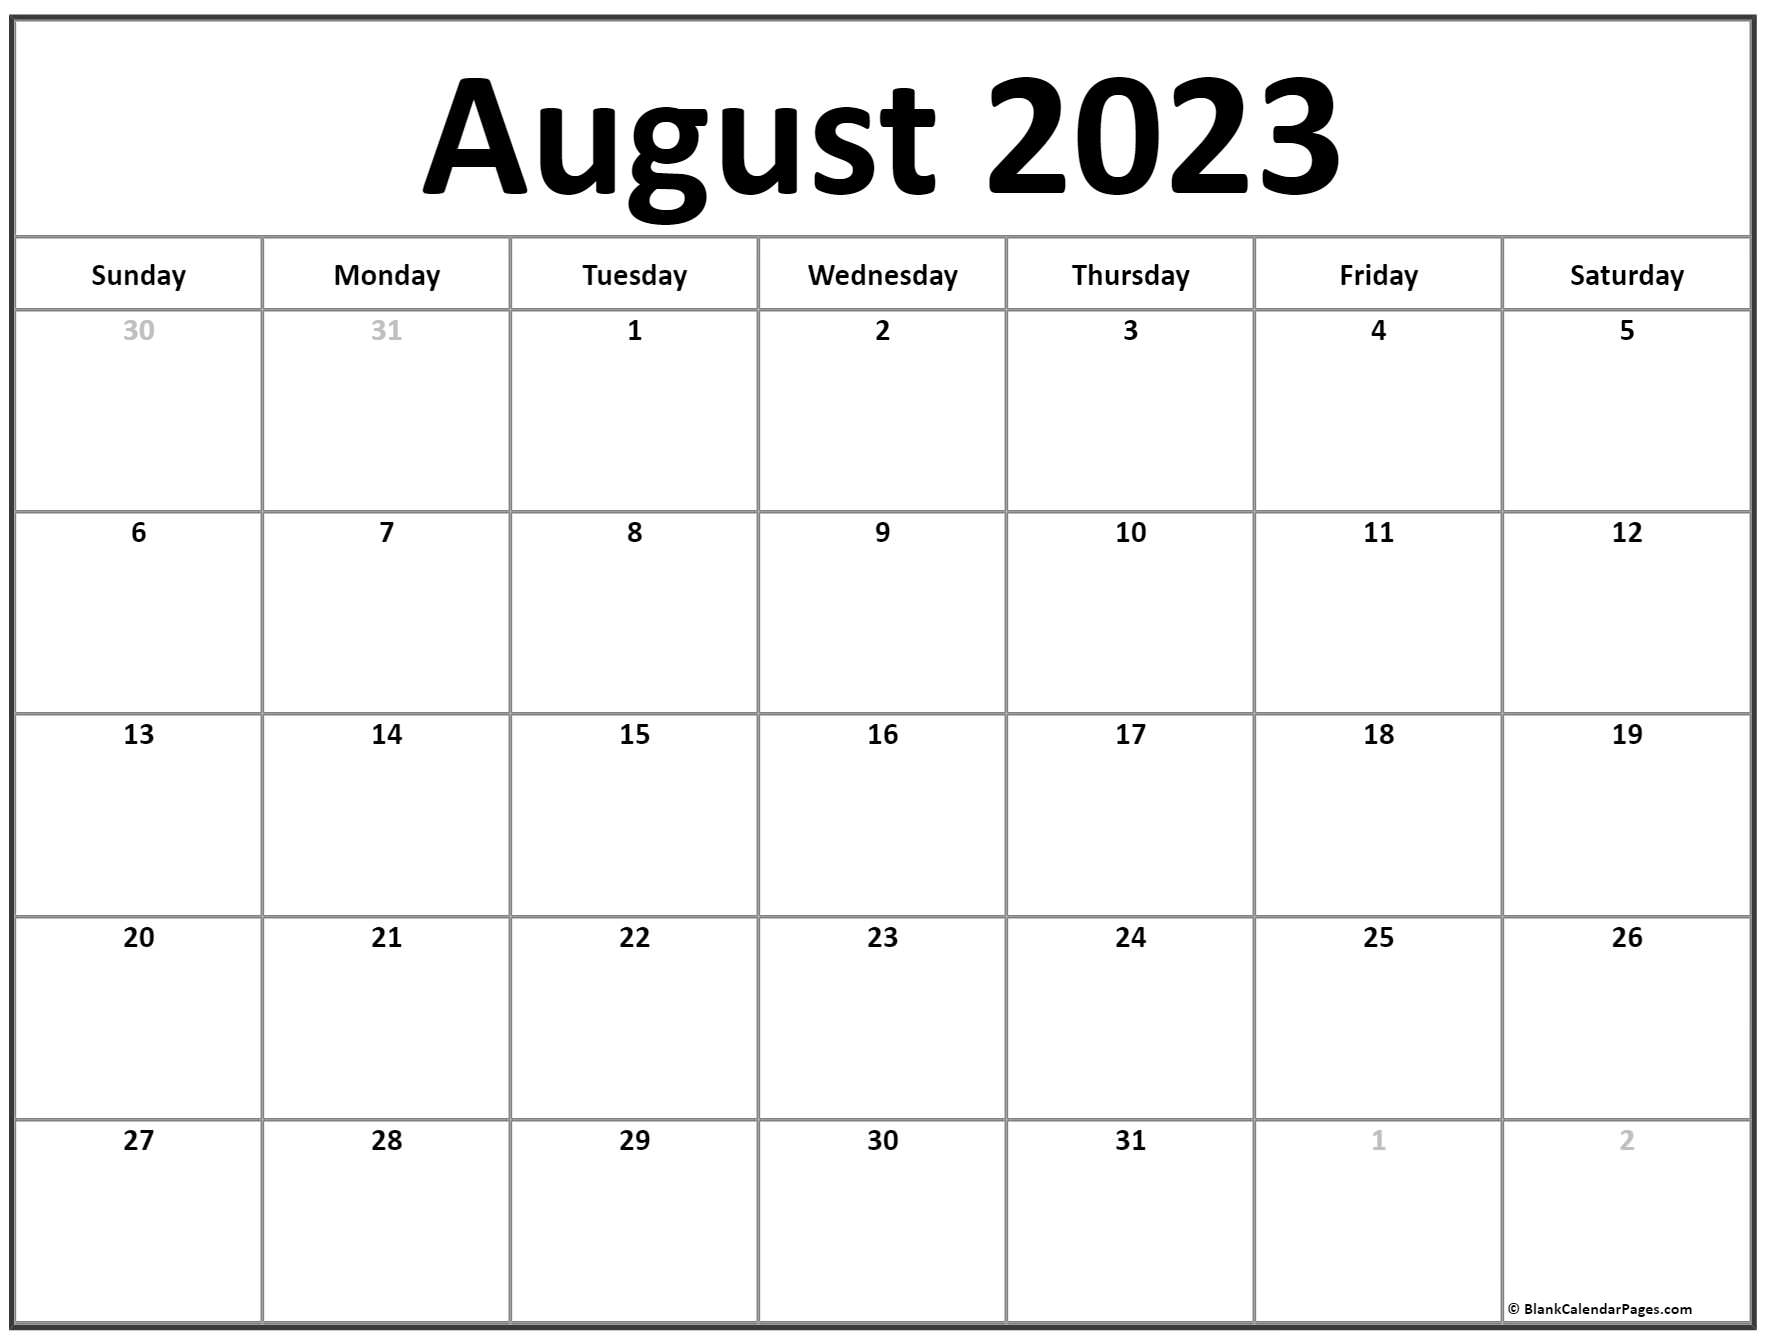 August 2023 Calendar Free Printable - Printable Calendar 2023